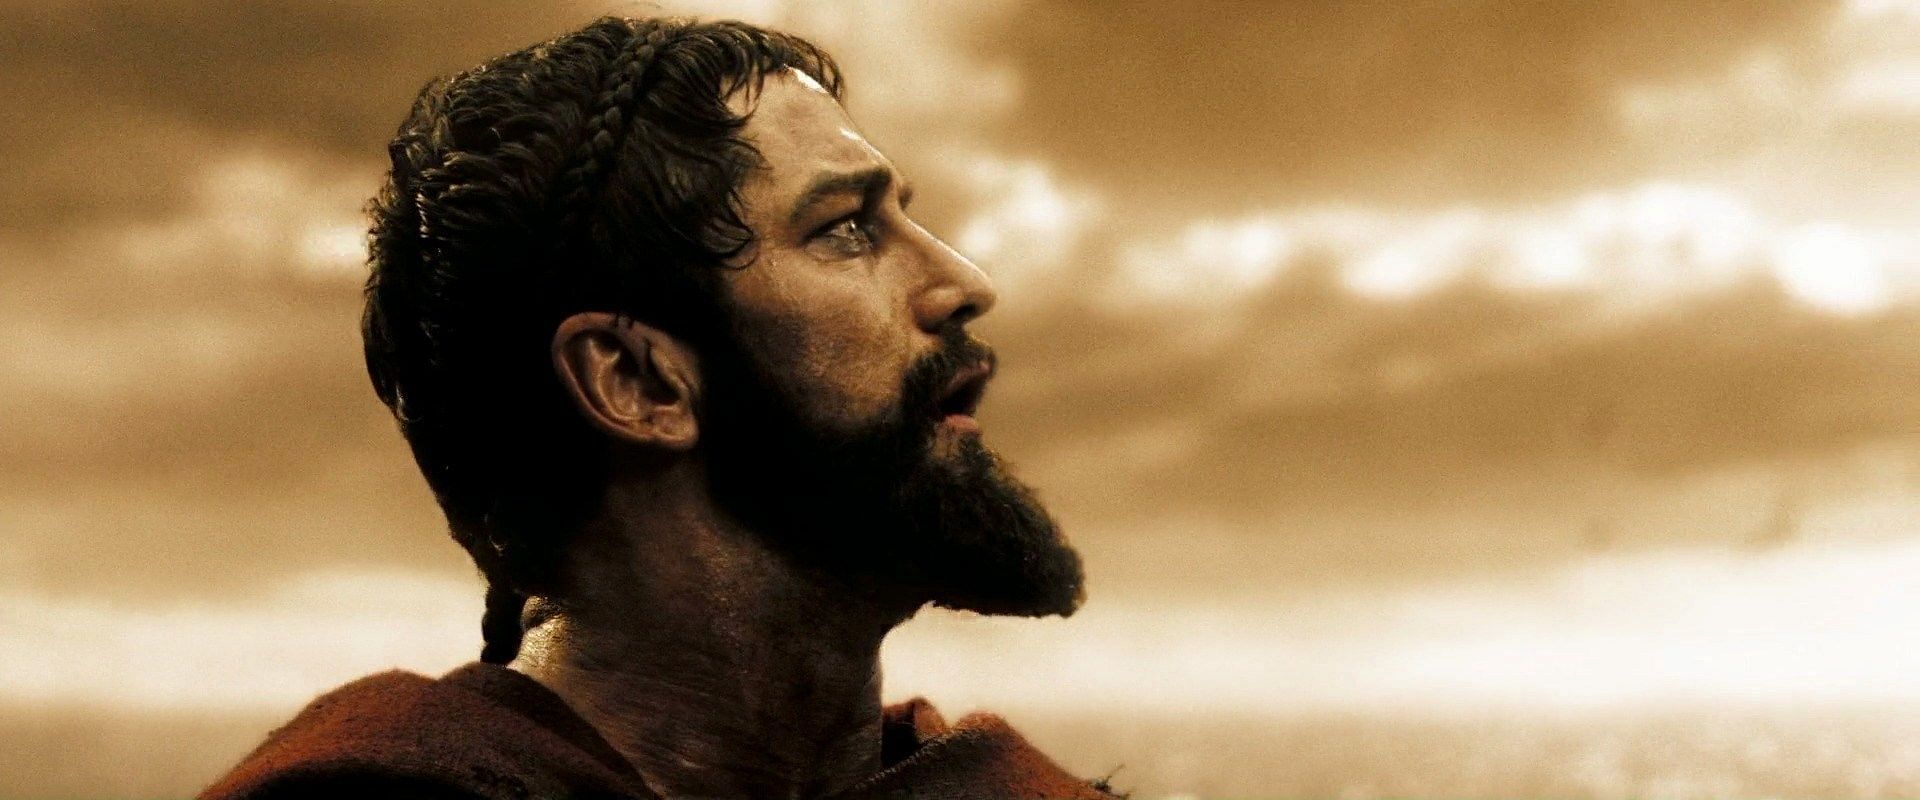 Gerard made King Leonidas a hero (Image via IMDb)